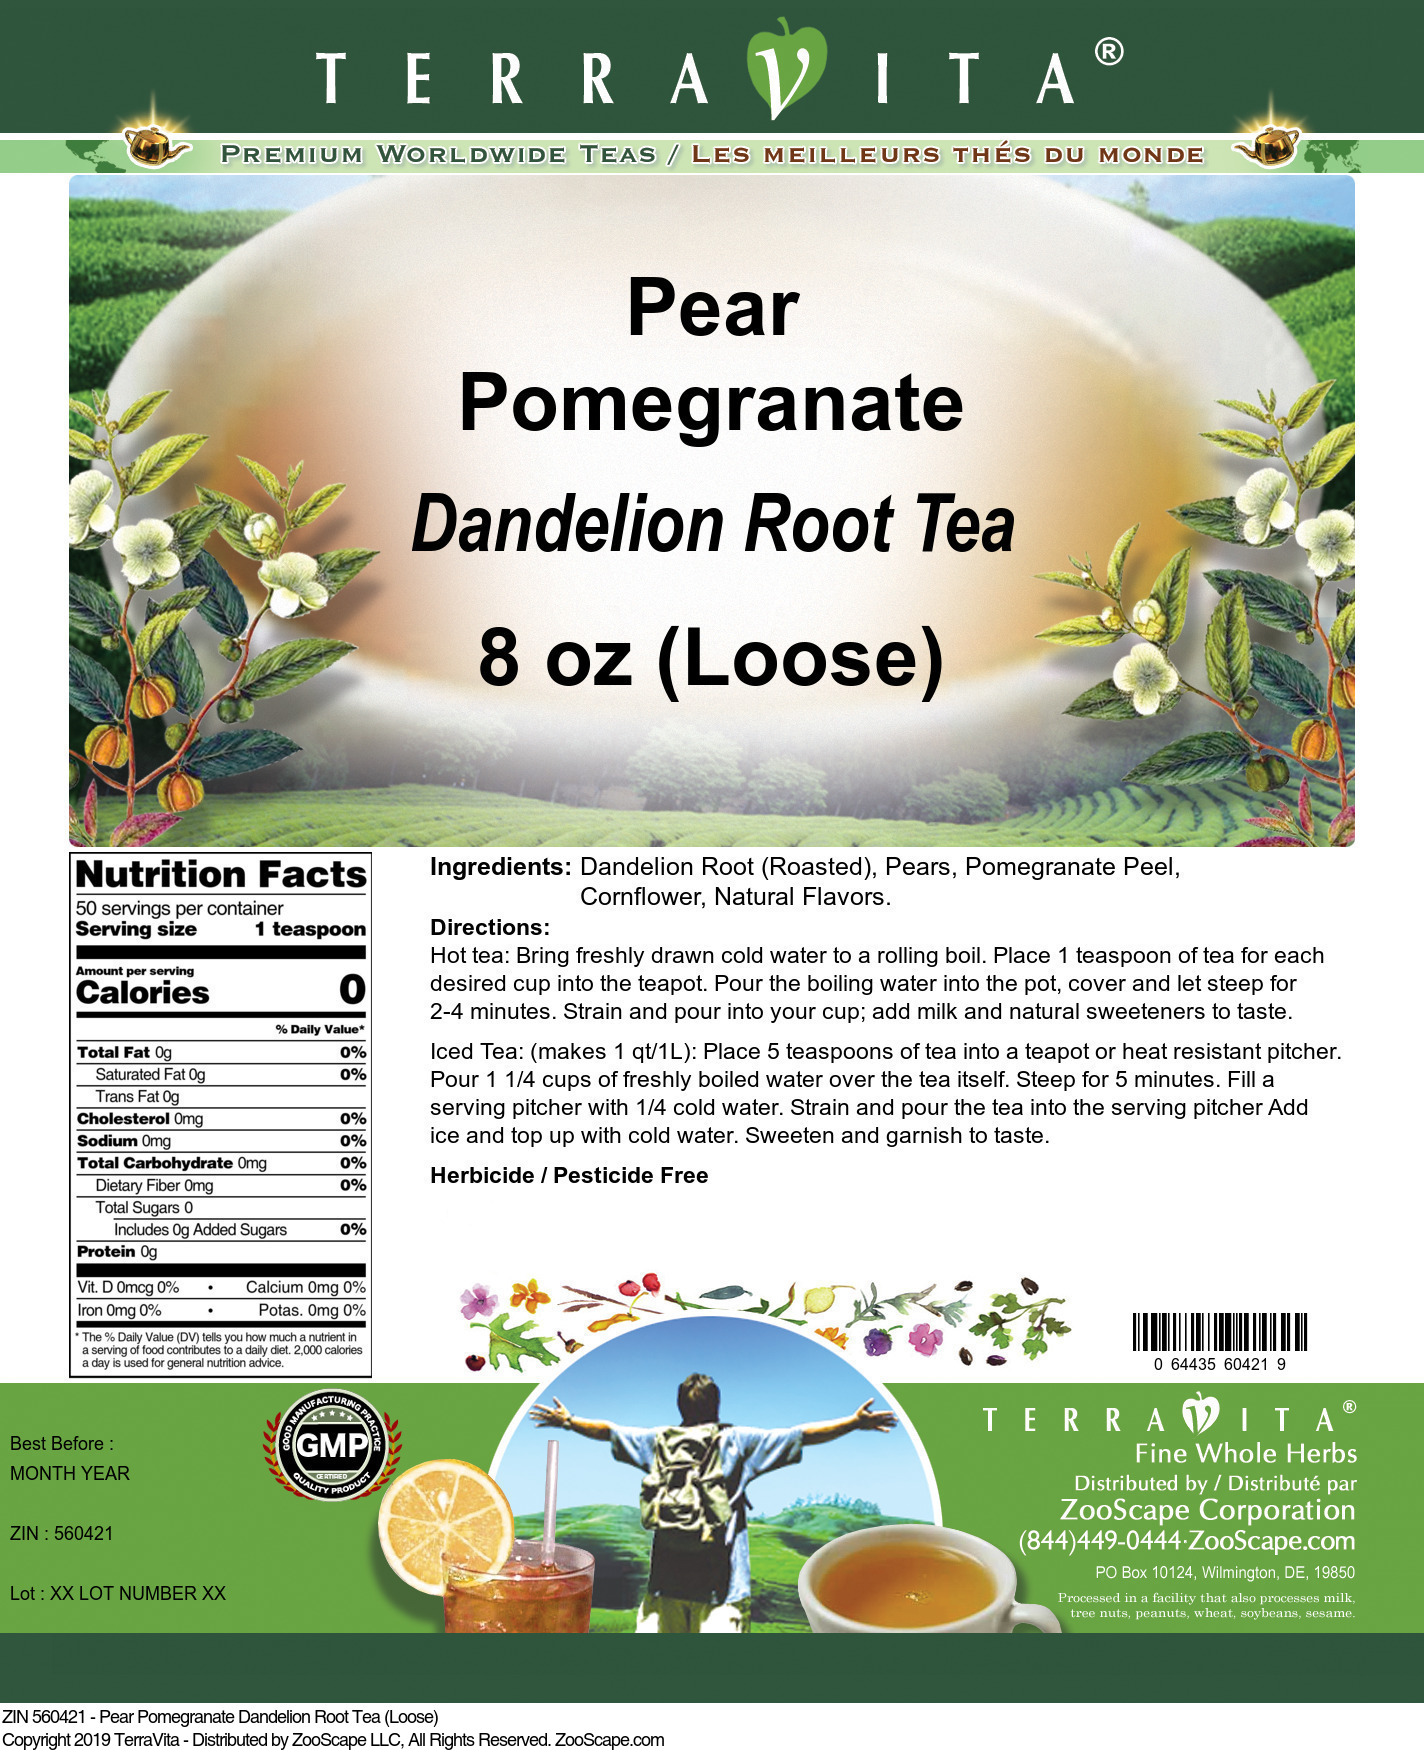 Pear Pomegranate Dandelion Root Tea (Loose) - Label